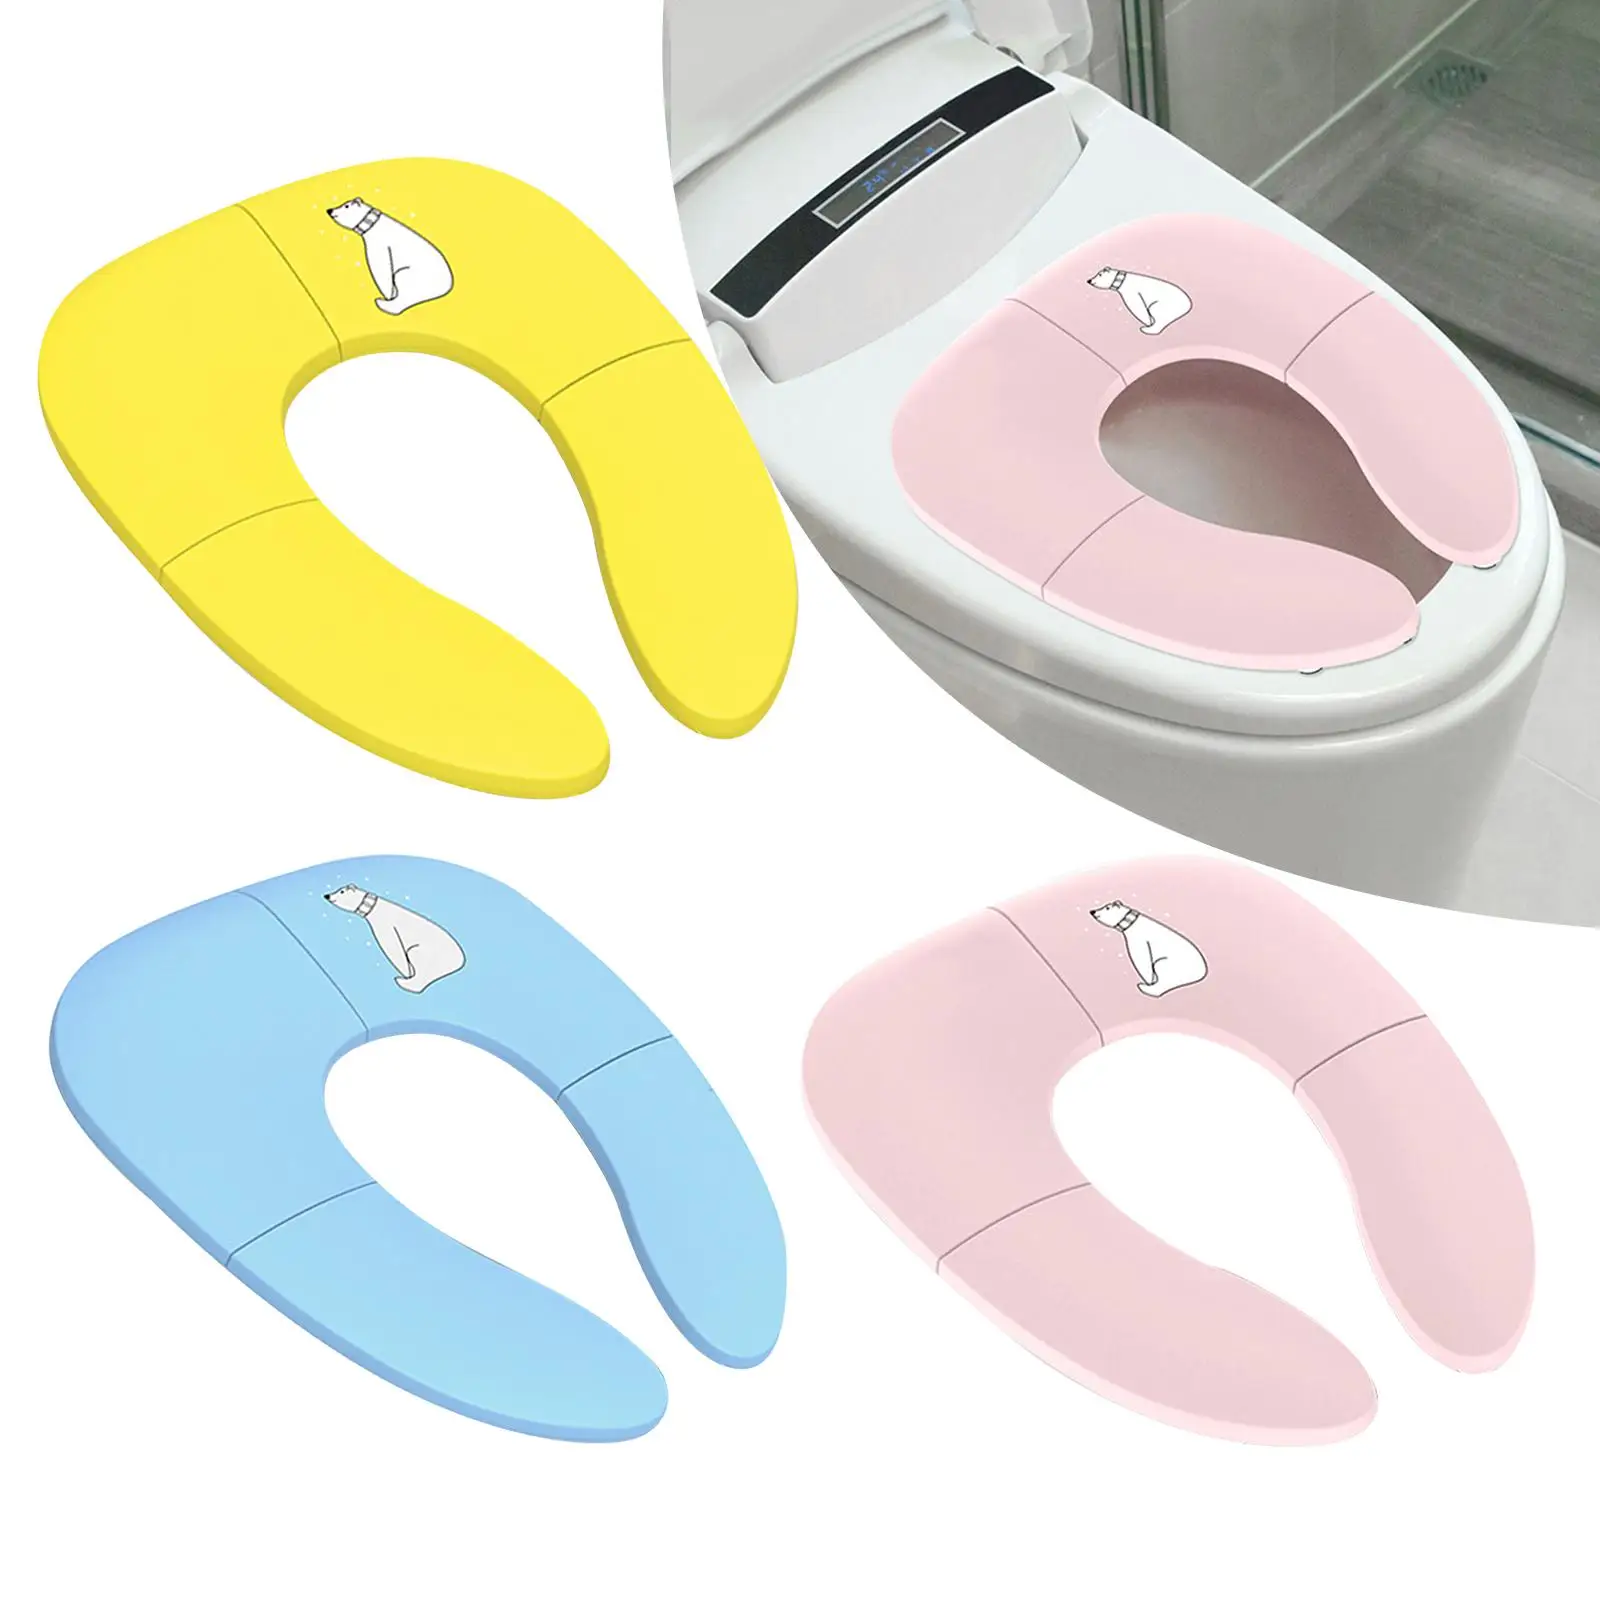 Folding Toilet pad Non Slip Toilet Seat pad for Home Use Travel Boys Girls